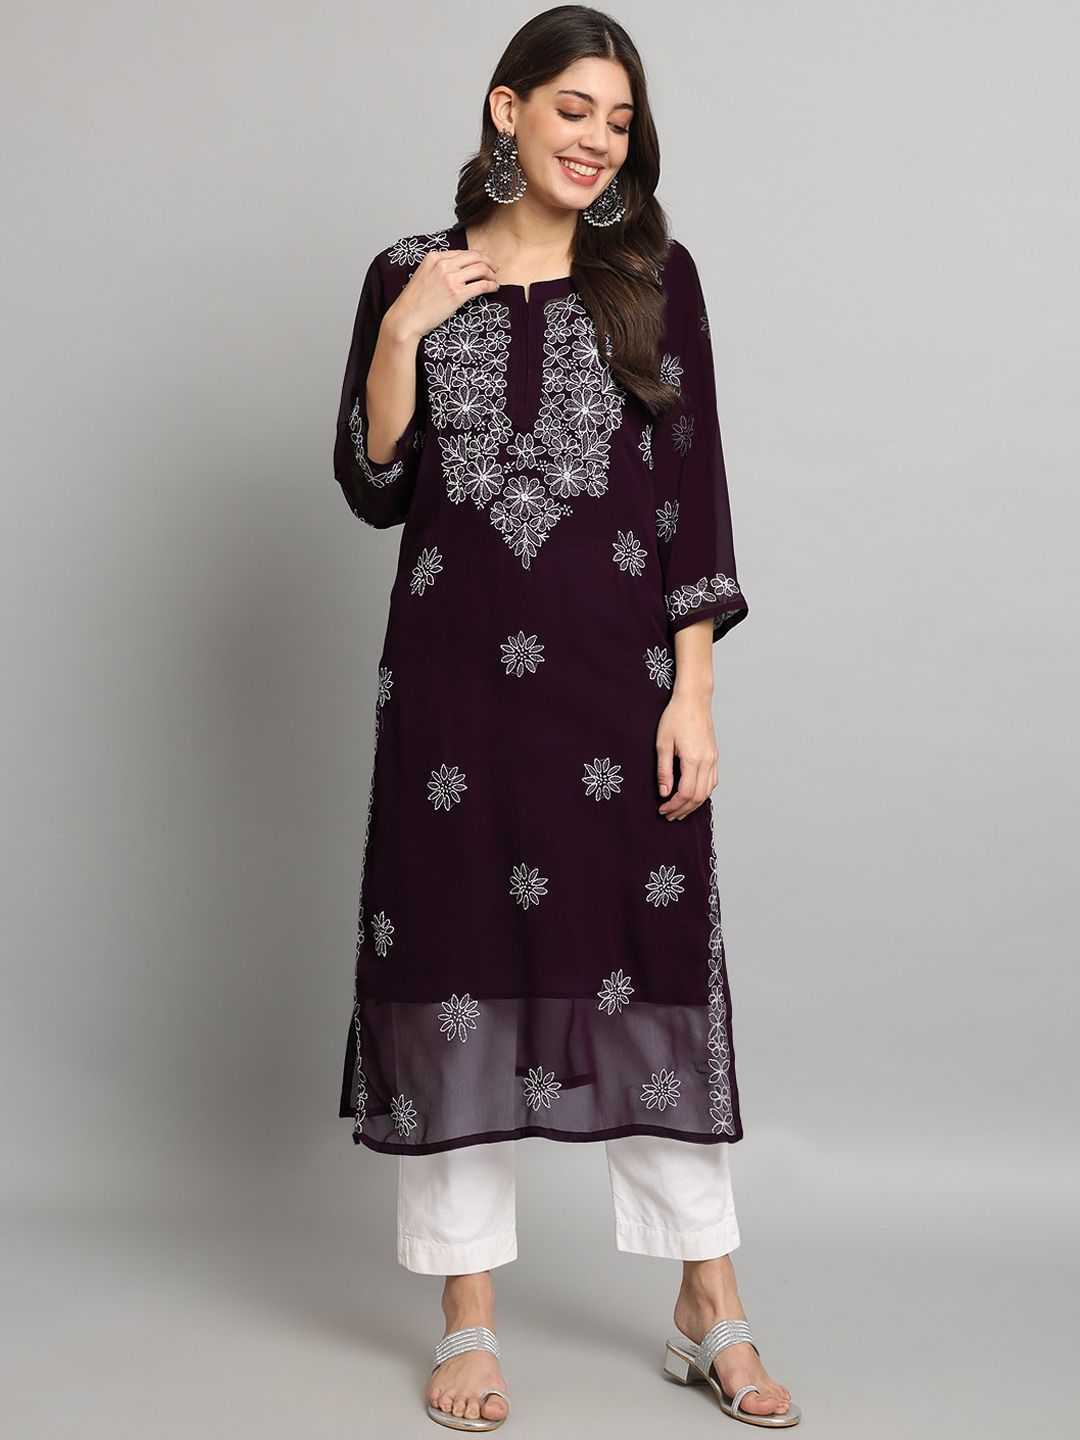 PARAMOUNT CHIKAN Women Purple & White Ethnic Motifs Embroidered Chikankari Floral Georgette Kurta Price in India